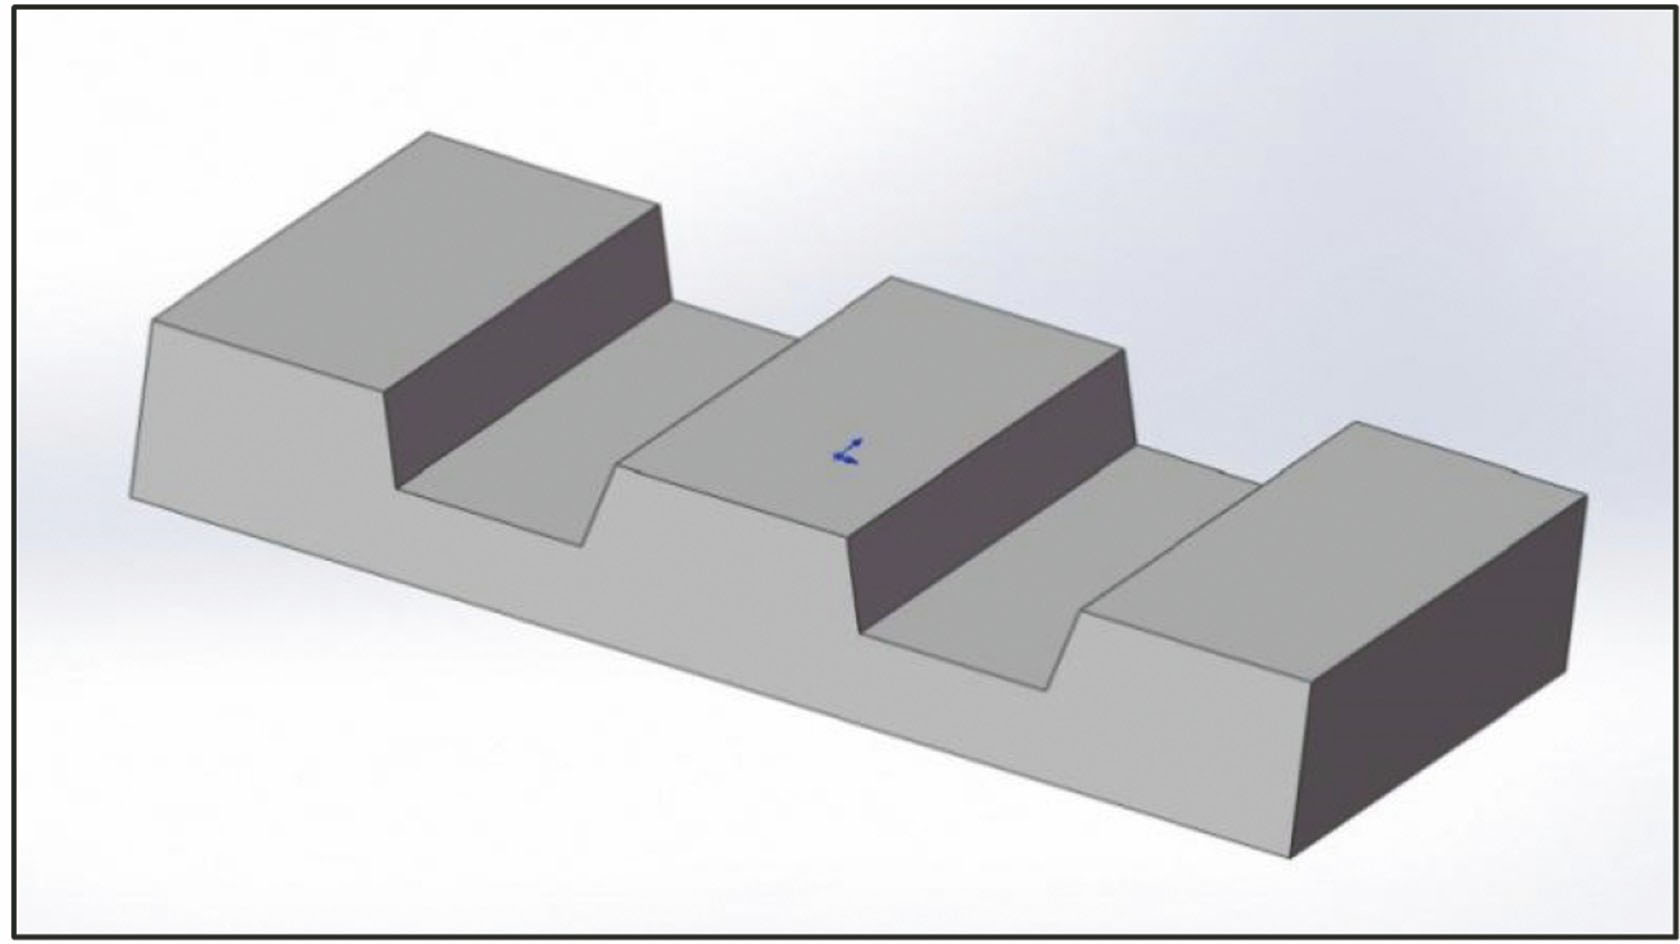 Standard line spacing sample with micro-nano size